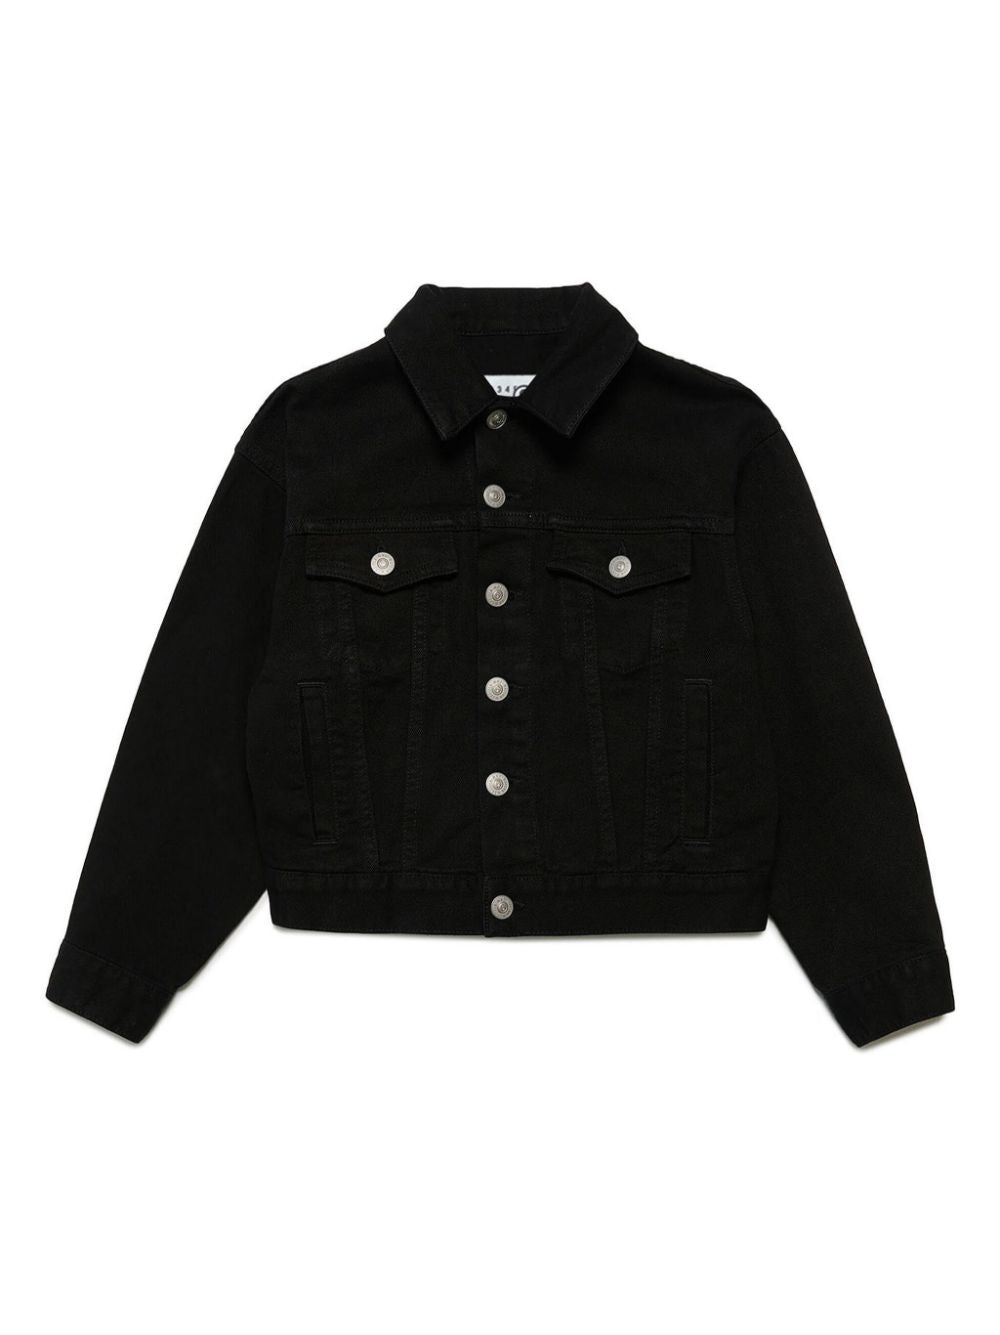 Black denim jacket for girls